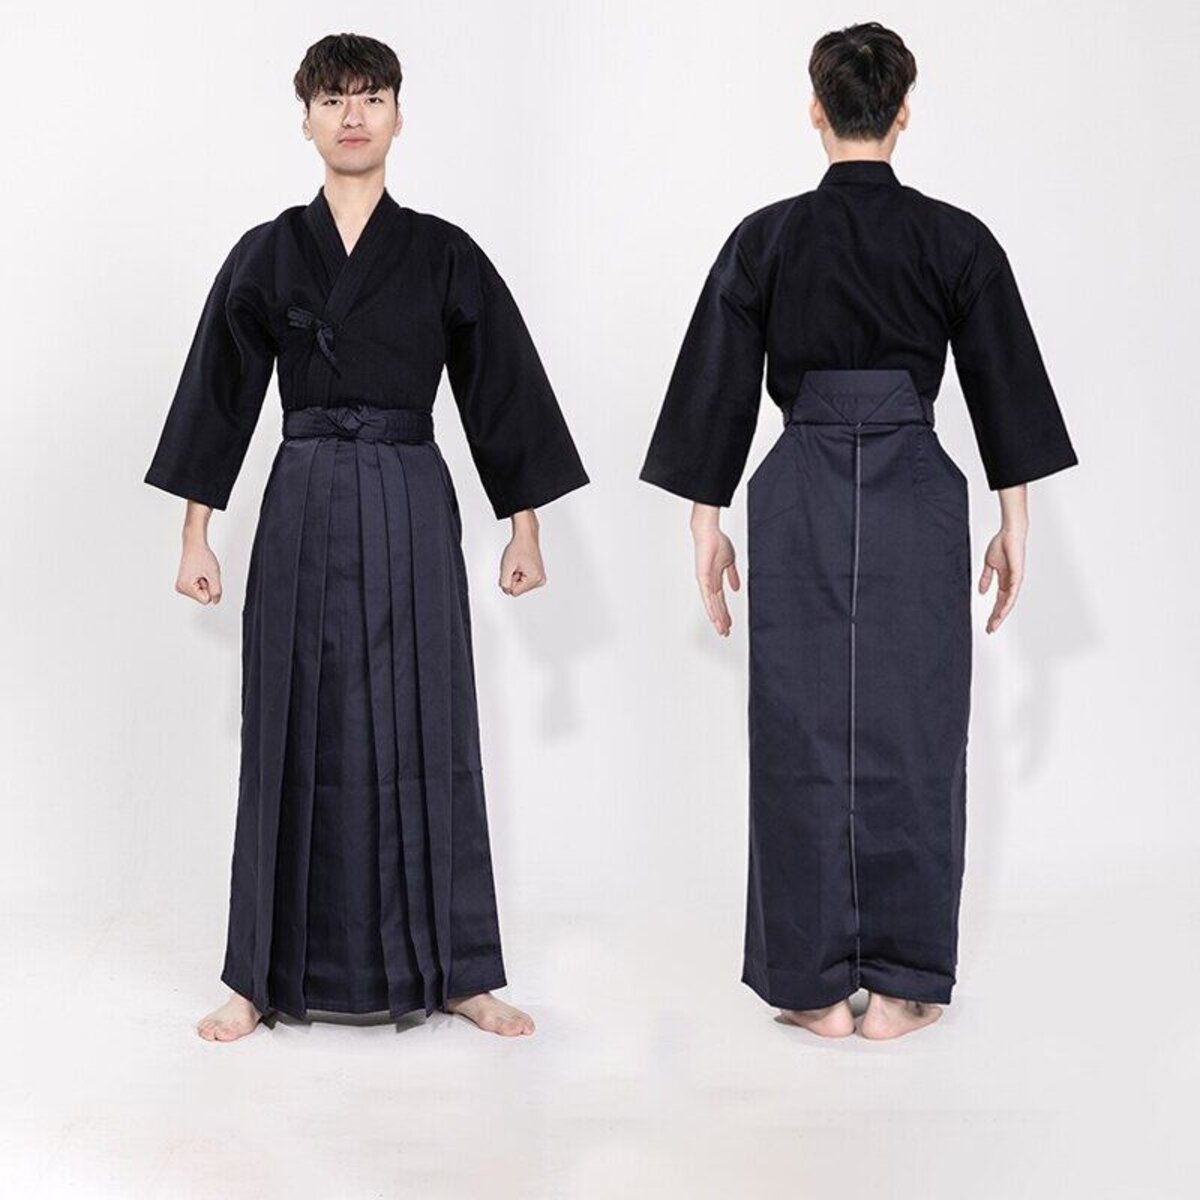 Mẫu đồng phục Kendo phổ biến